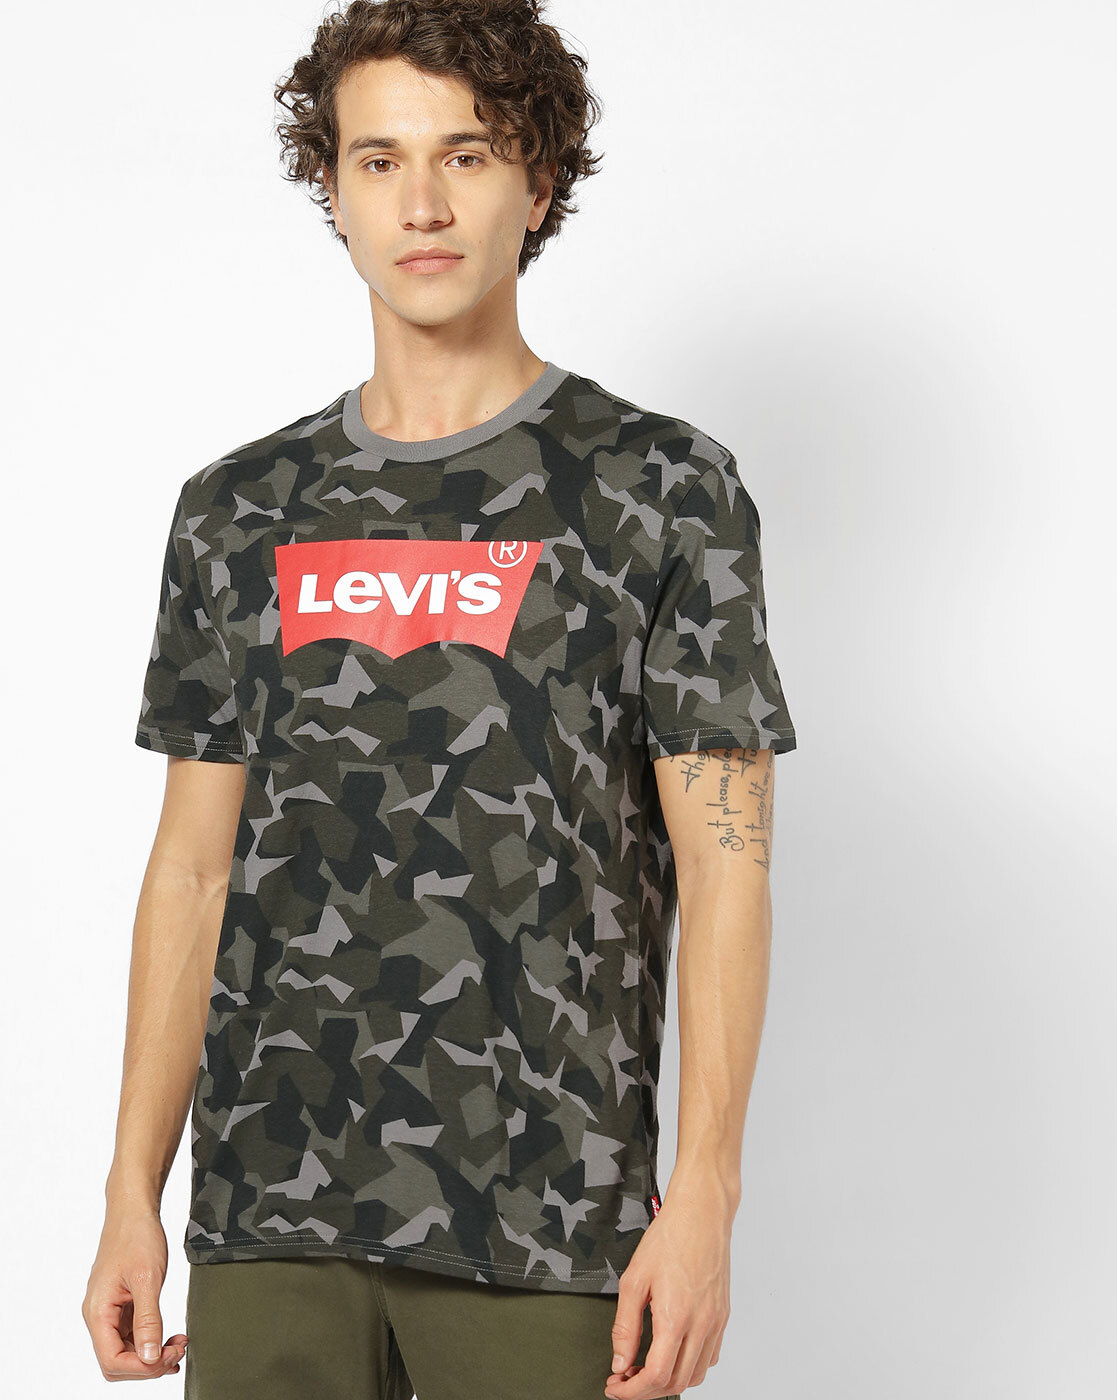 levi's camo t shirt